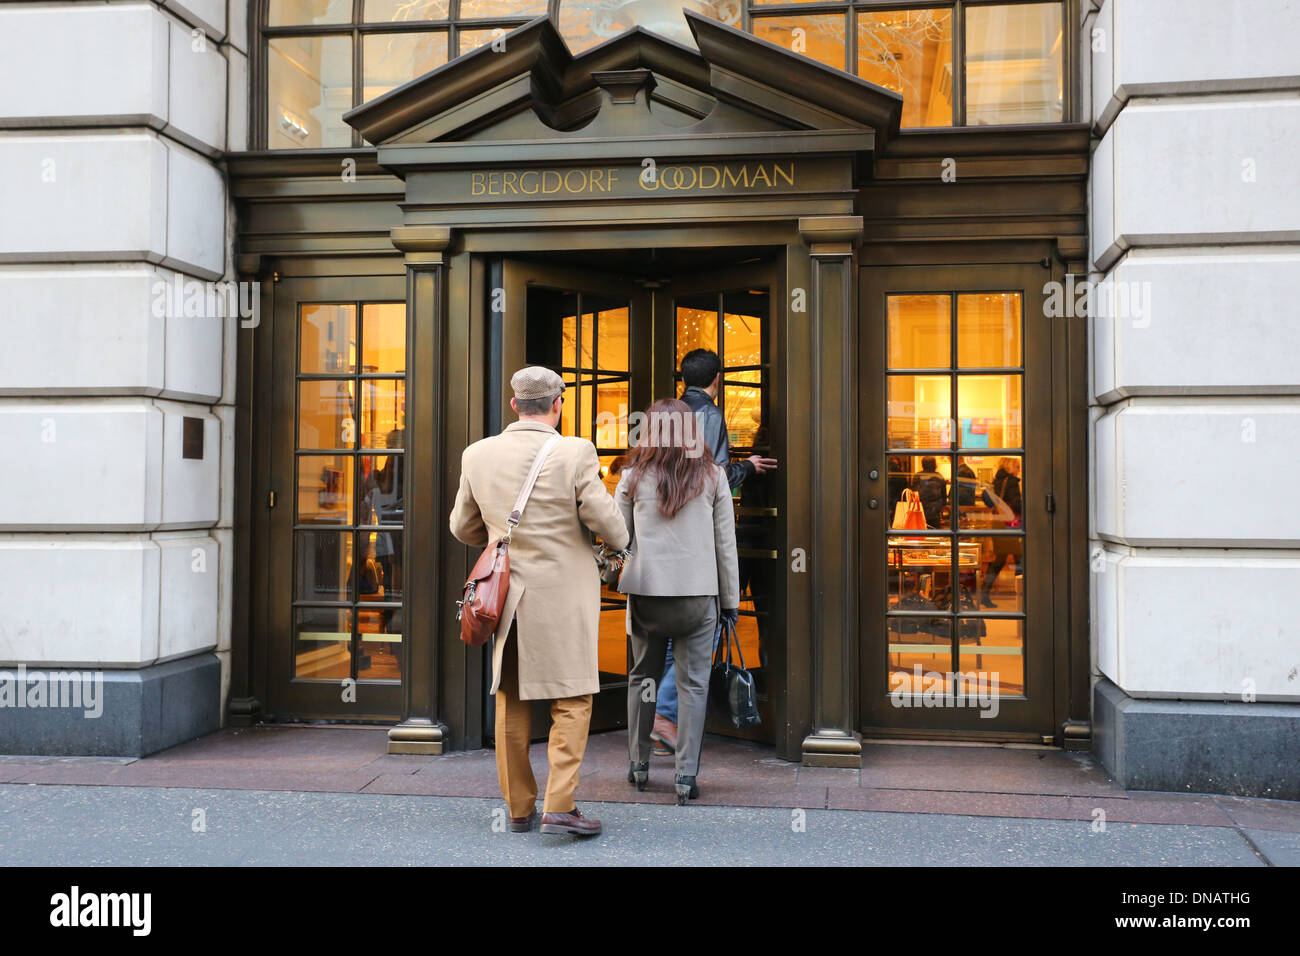 Bergdorf Goodman, 754 5th Avenue, New York, NY. personnes entrant dans un magasin. Banque D'Images